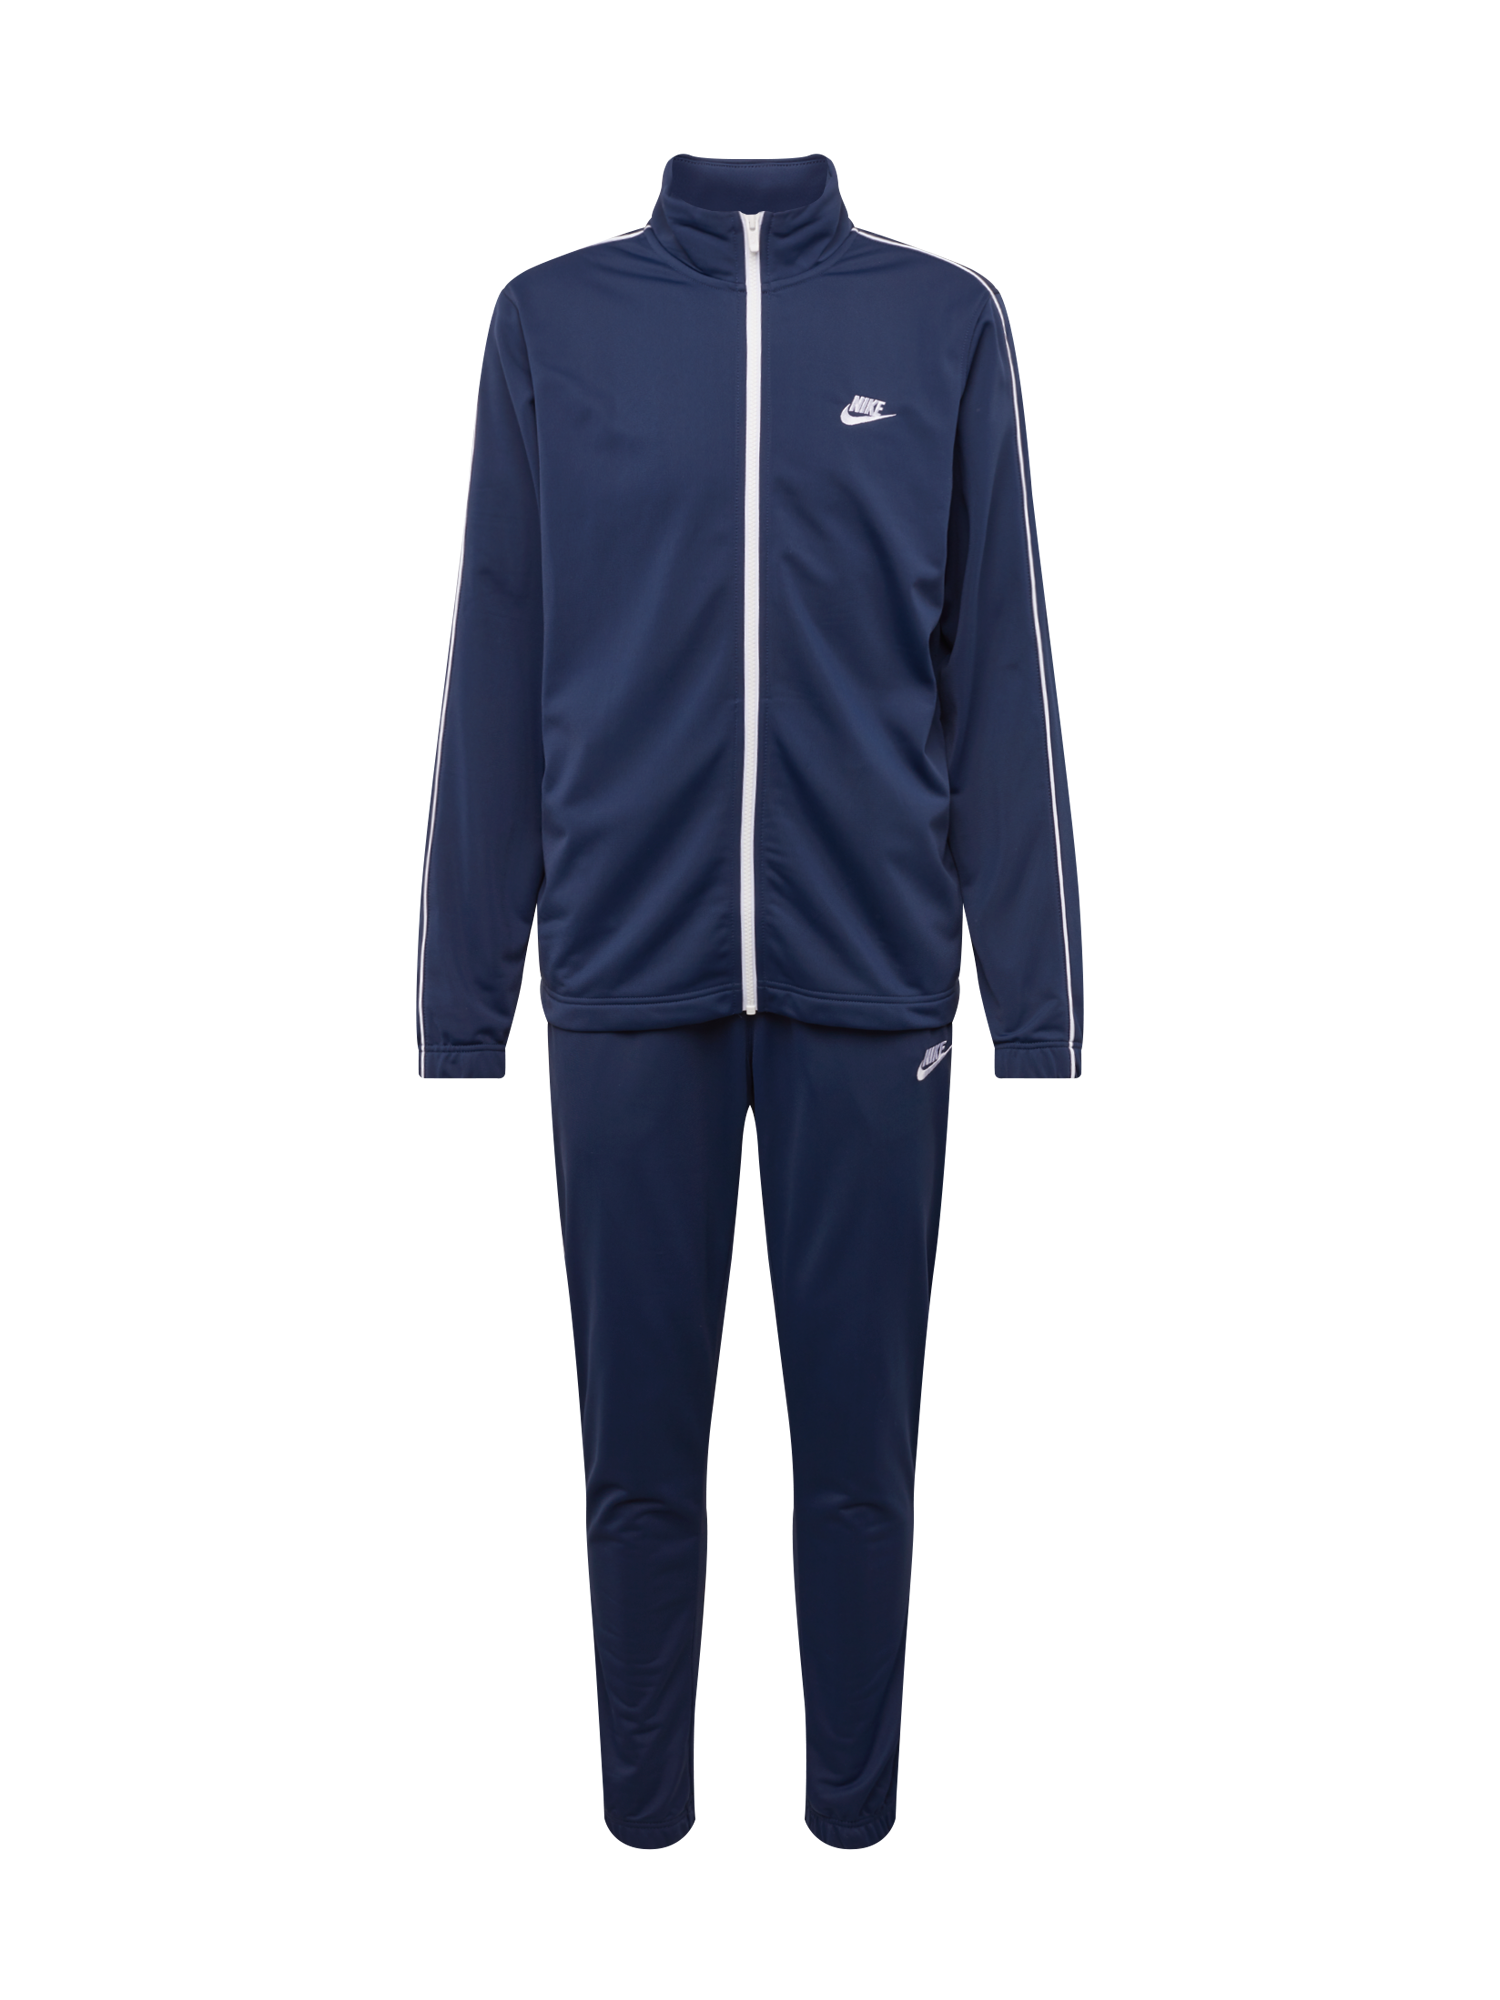 Nike Sportswear leisure suit 'M NSW CE TRK SUIT PK BASIC' em azul escuro